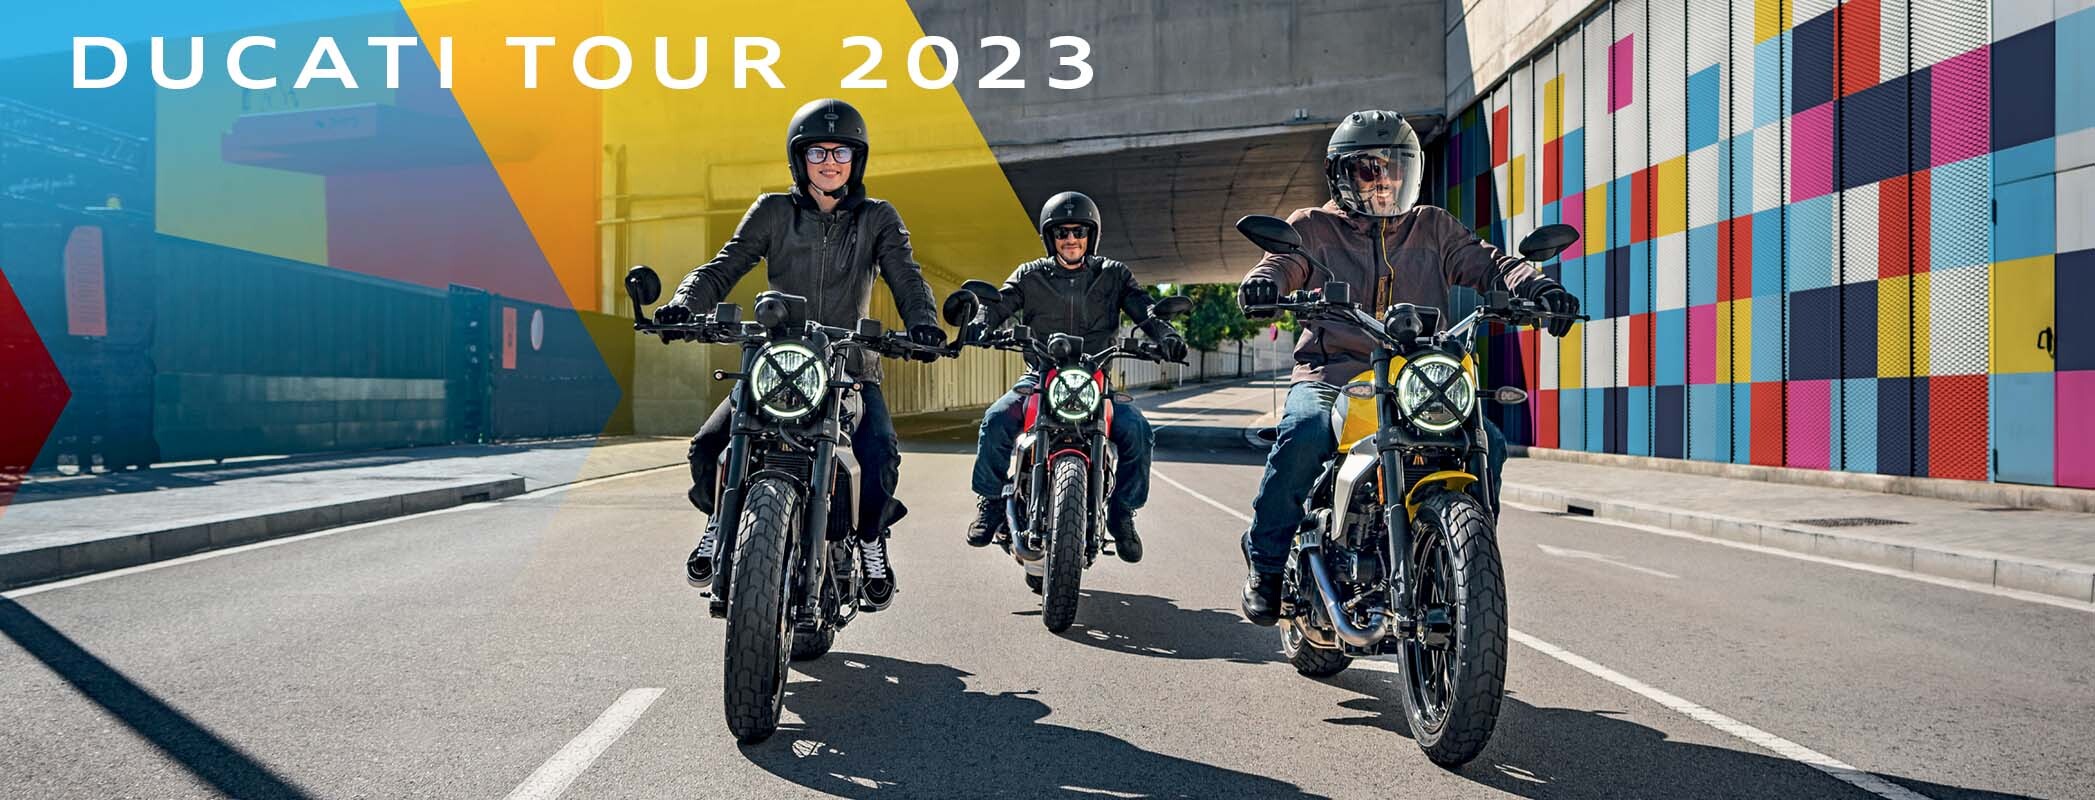 Ducati Tour 2023